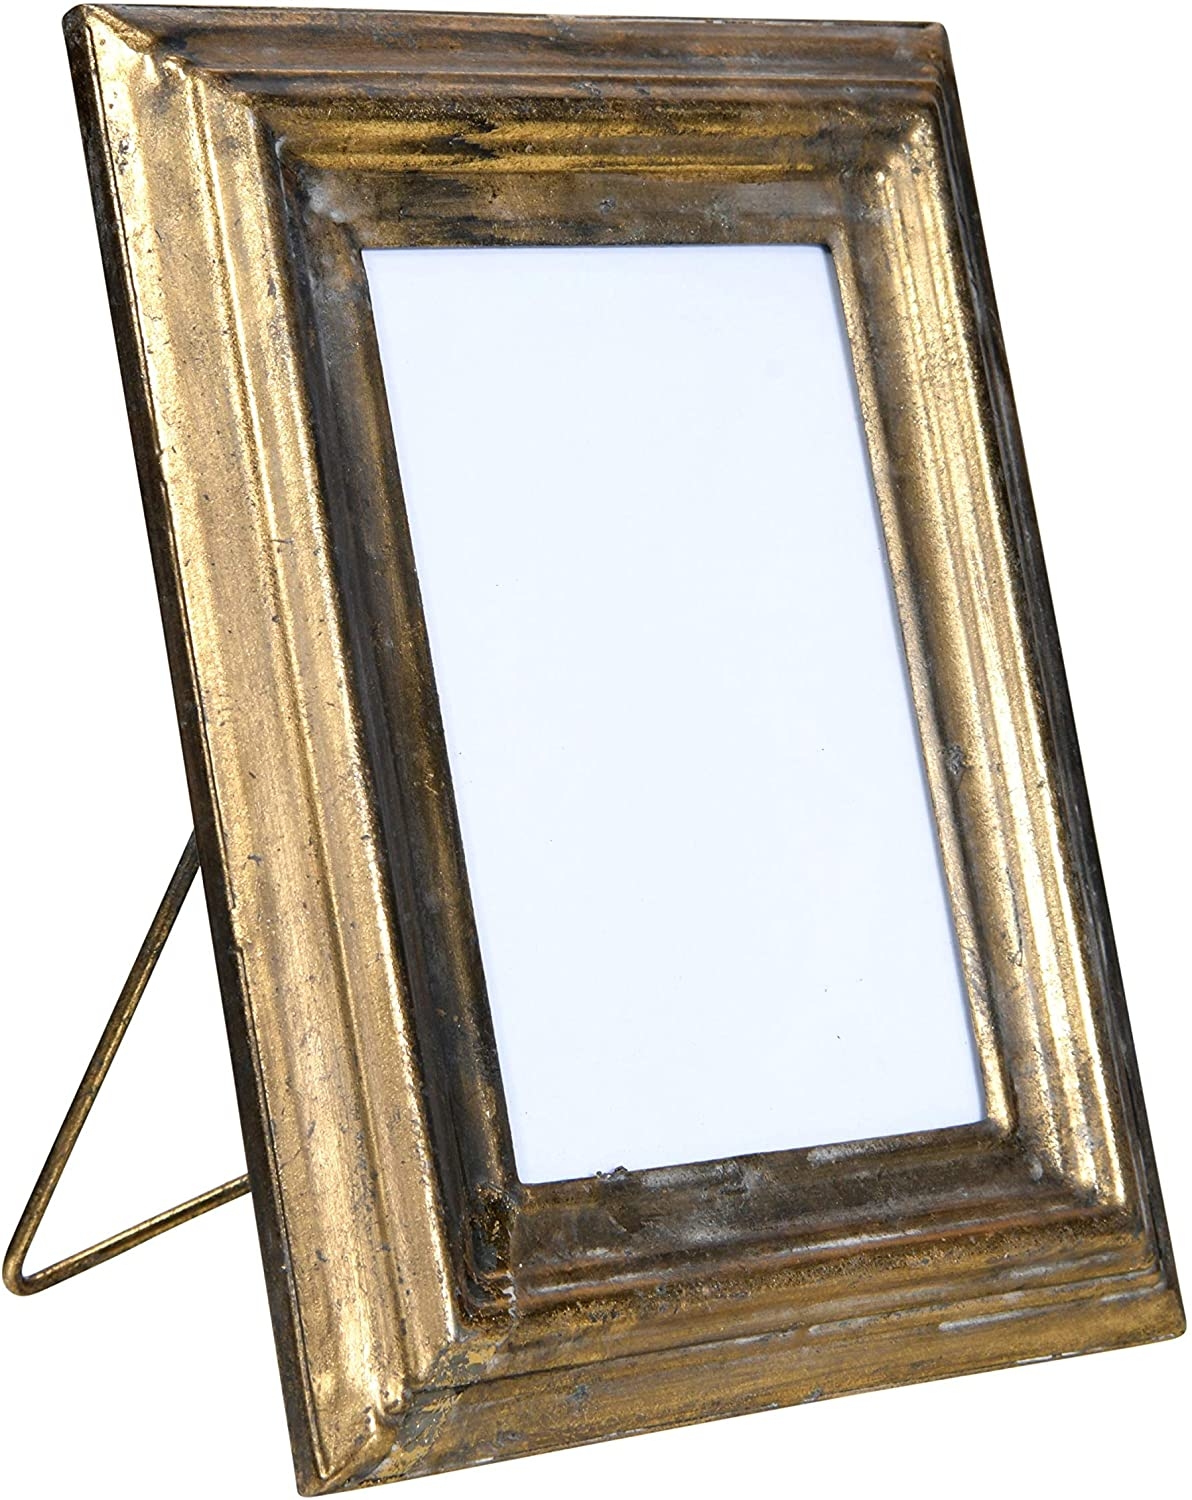 Juneau Antiqued Picture Frame, Gold, 4" x 6" - Image 2